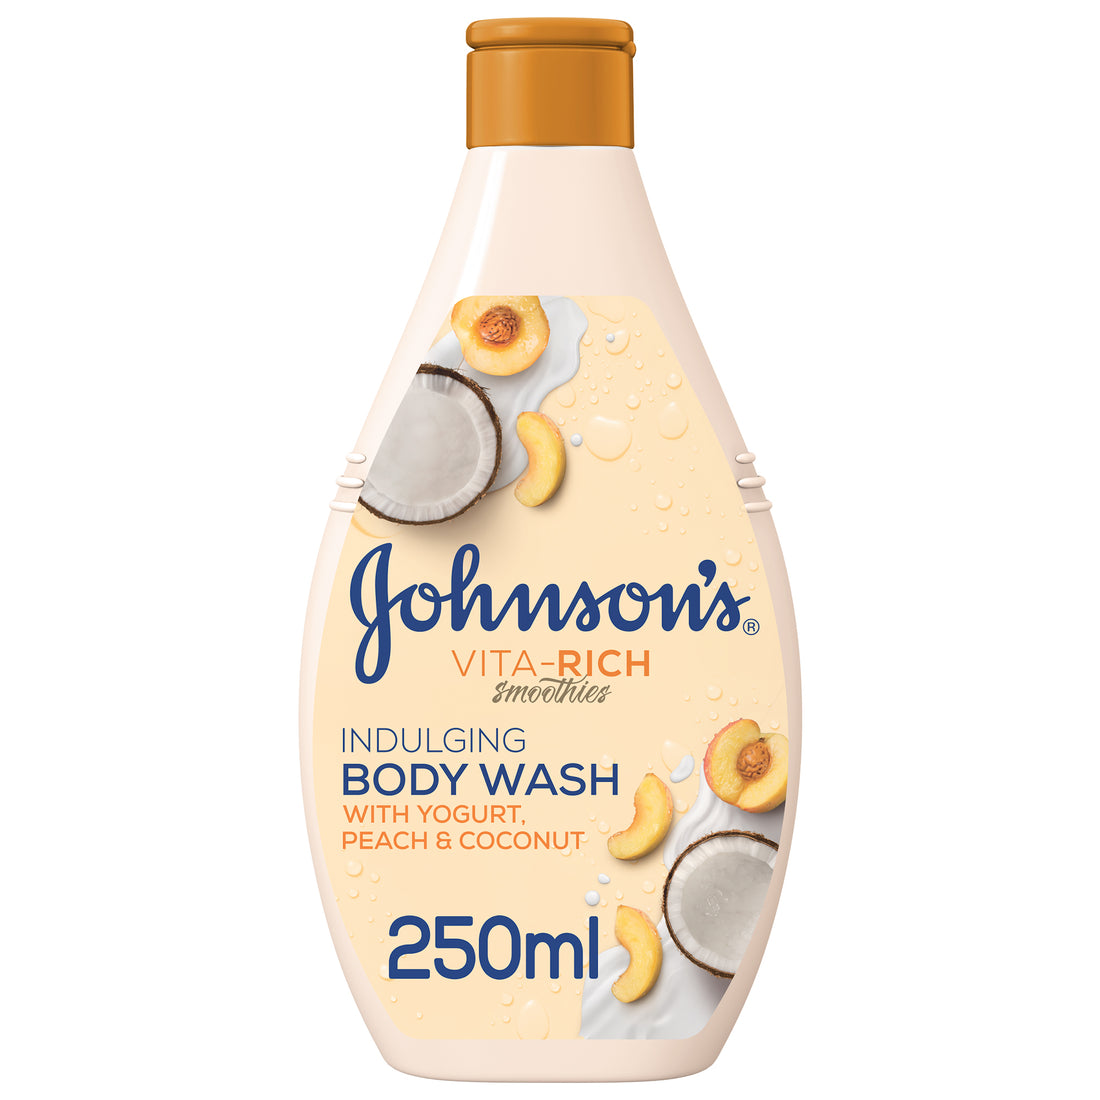 JOHNSON’S Body Wash - Vita-Rich, Smoothies, Indulging, Yogurt, Peach &amp; Coconut, 250ml